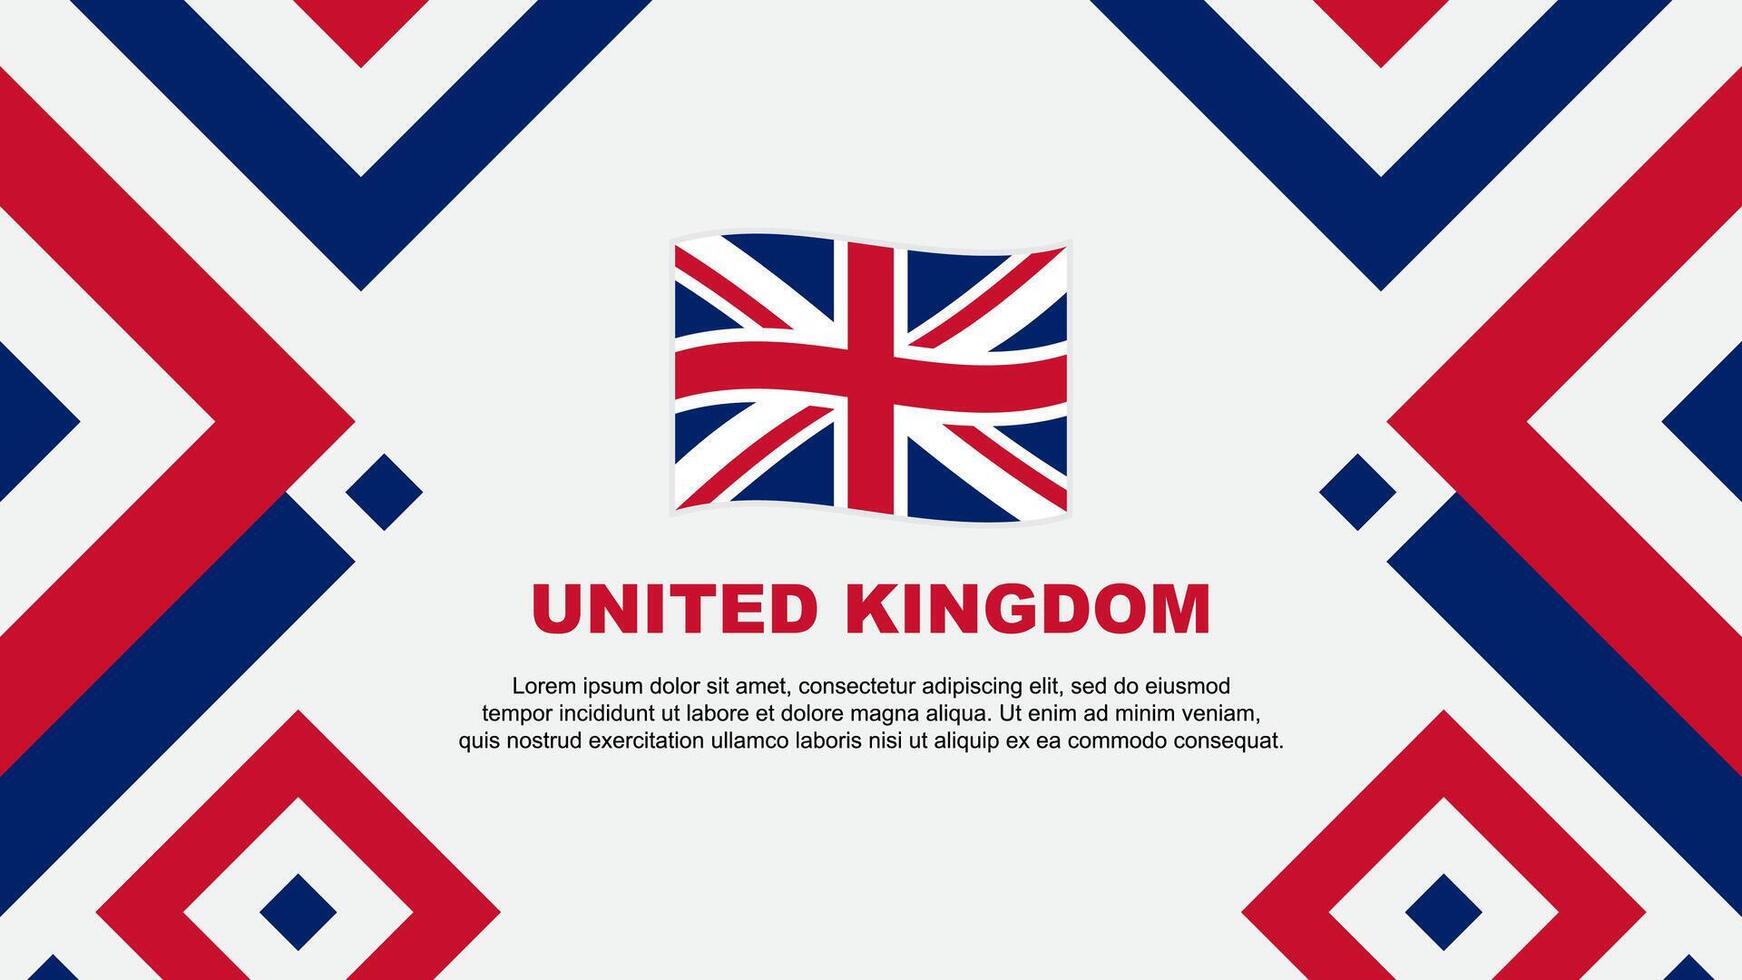 United Kingdom Flag Abstract Background Design Template. United Kingdom Independence Day Banner Wallpaper Vector Illustration. United Kingdom Template